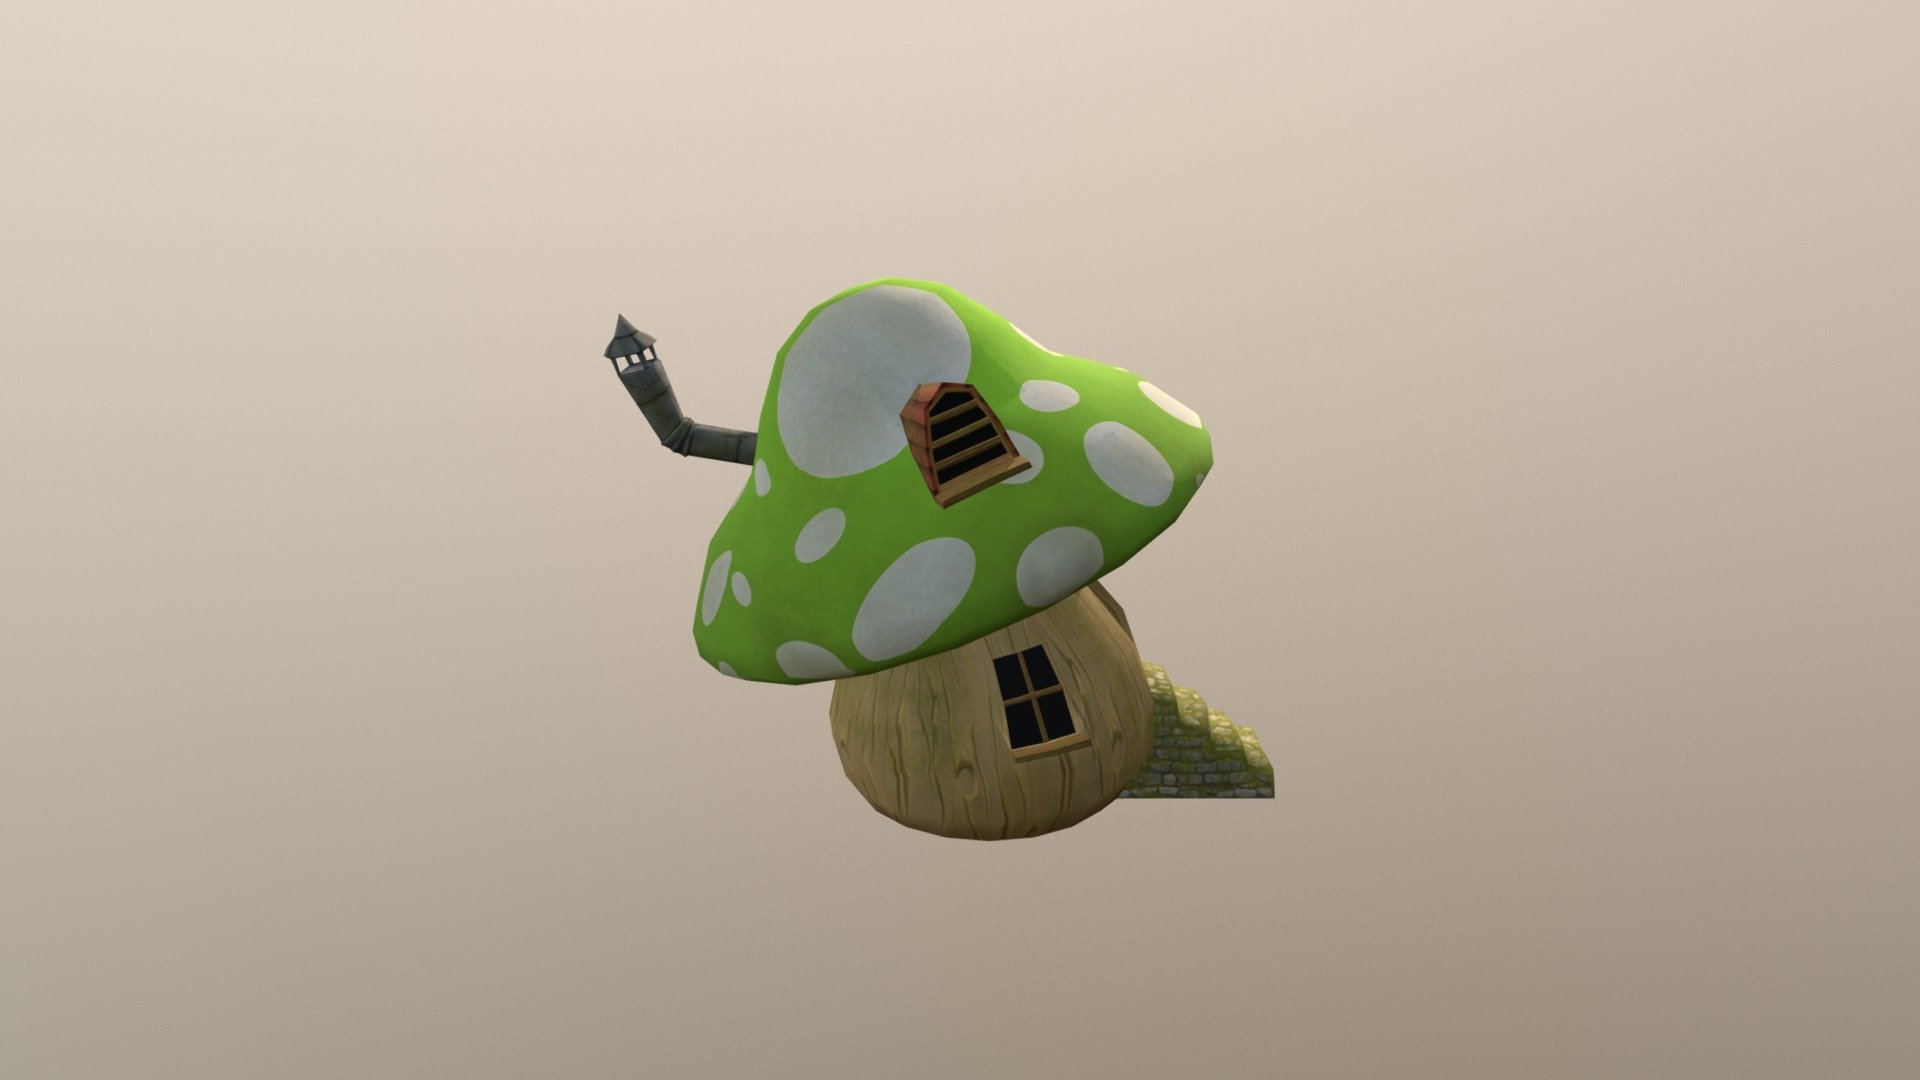 Small mushroom house in cartoon style - Mushroom House - 3D model by David Monz (@davdeo) 3d model